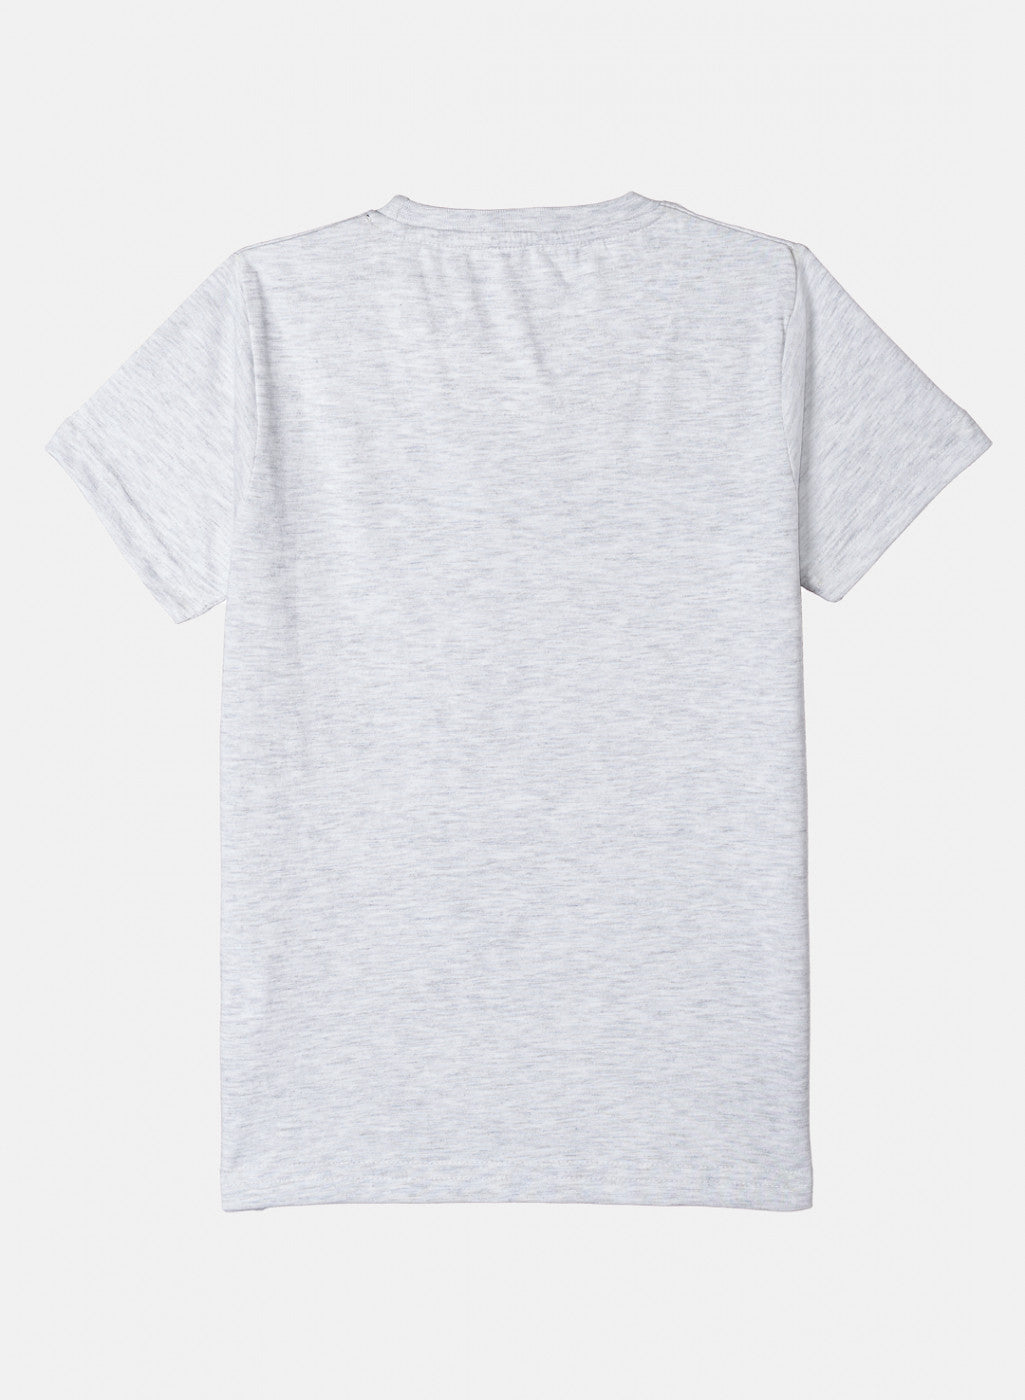 Boys Grey Printed T-Shirt